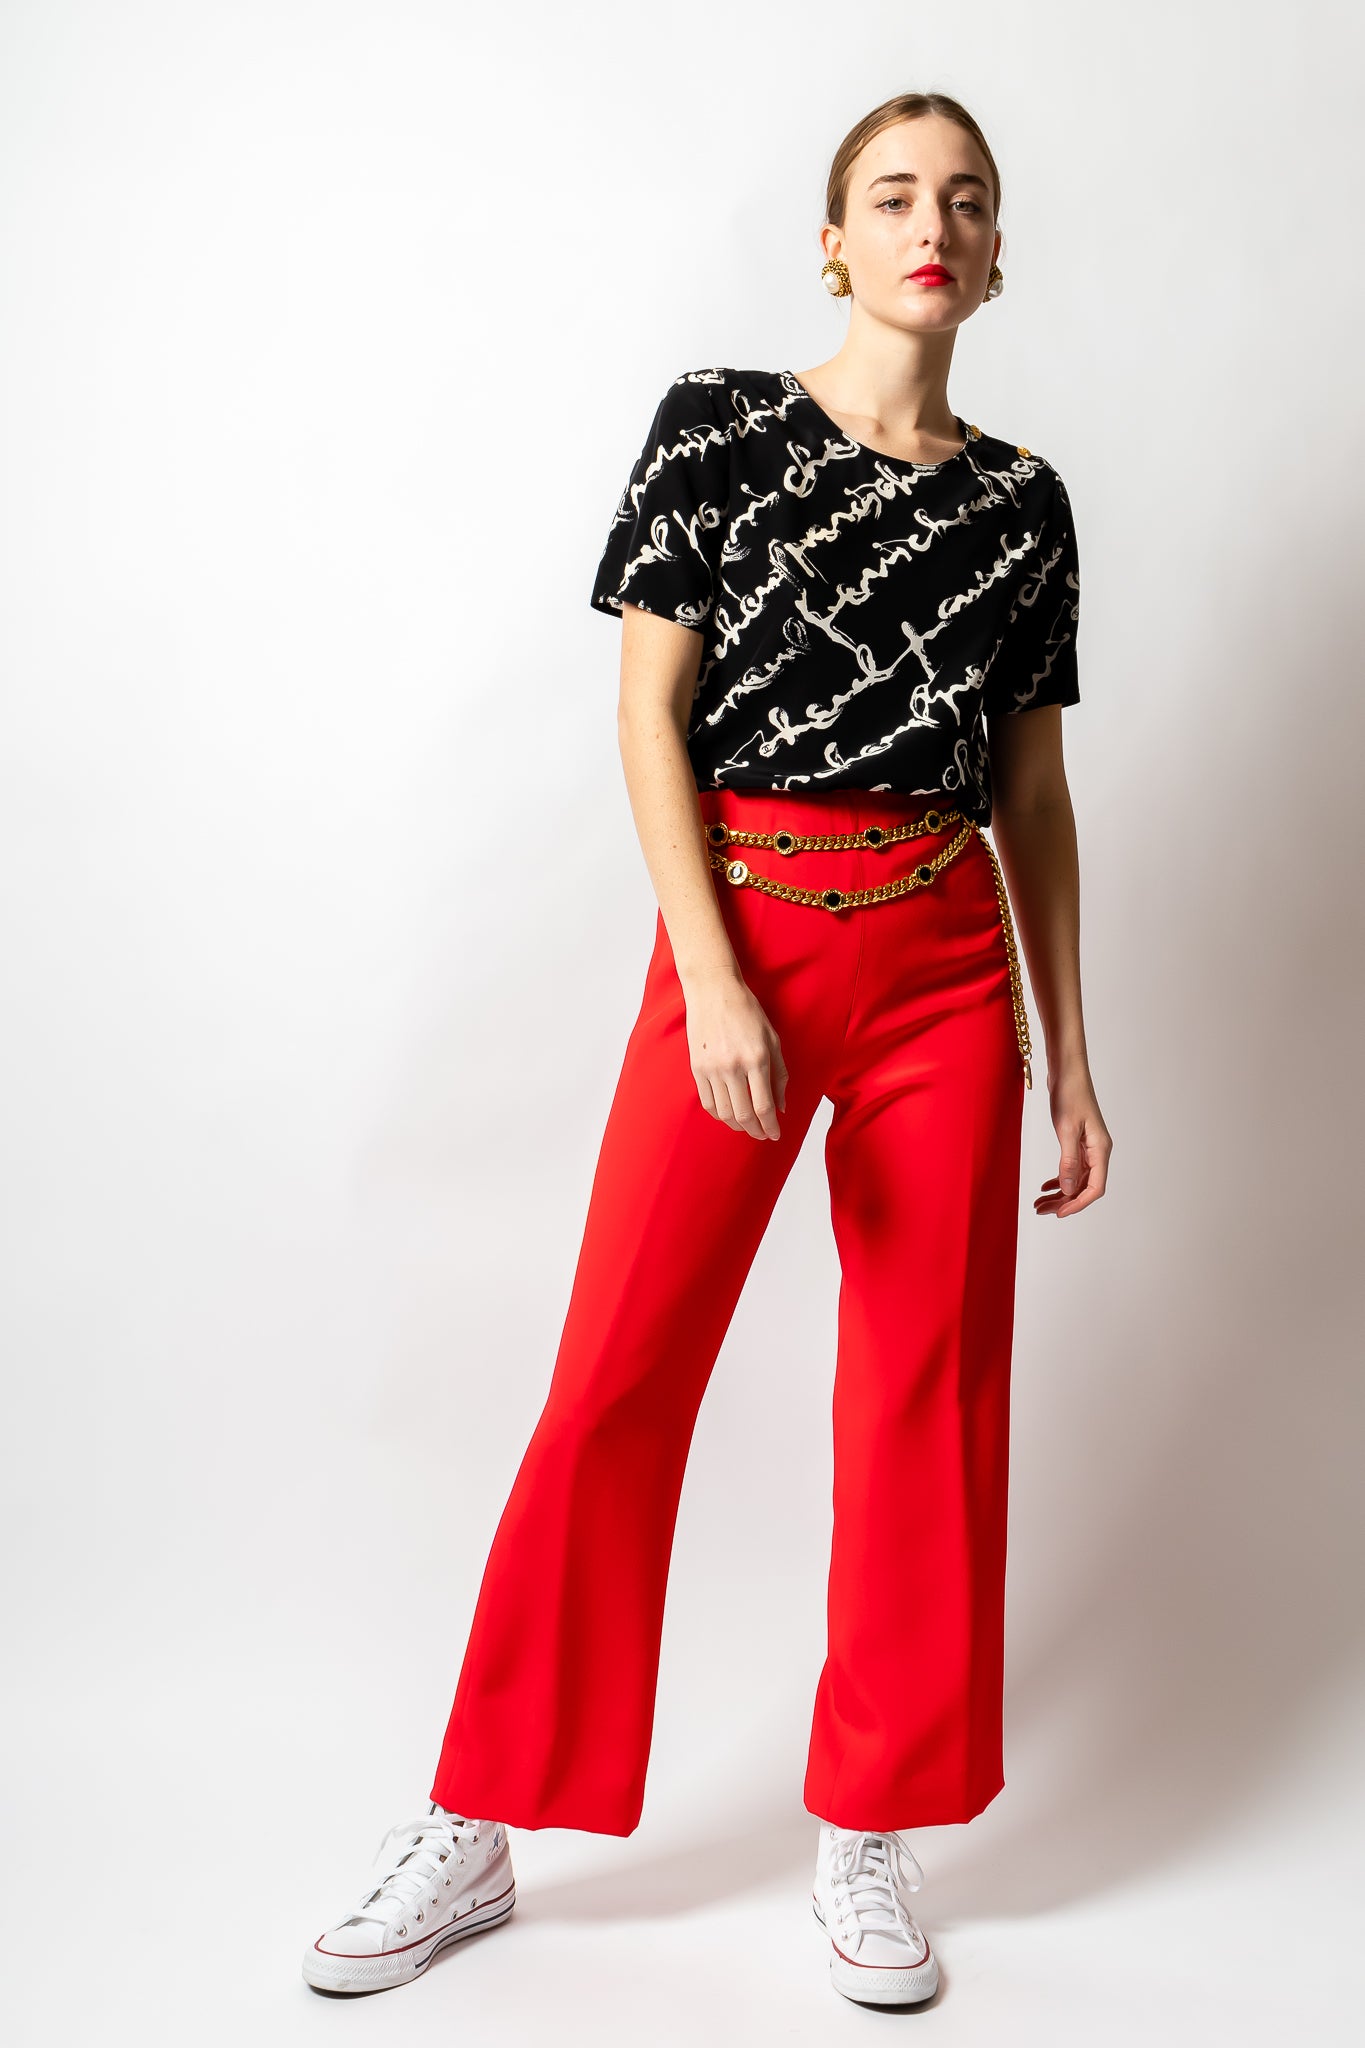 Girl wearing Chanel silk script tee shirt blouse & Oscar de la Renta red pant @ Recess LA